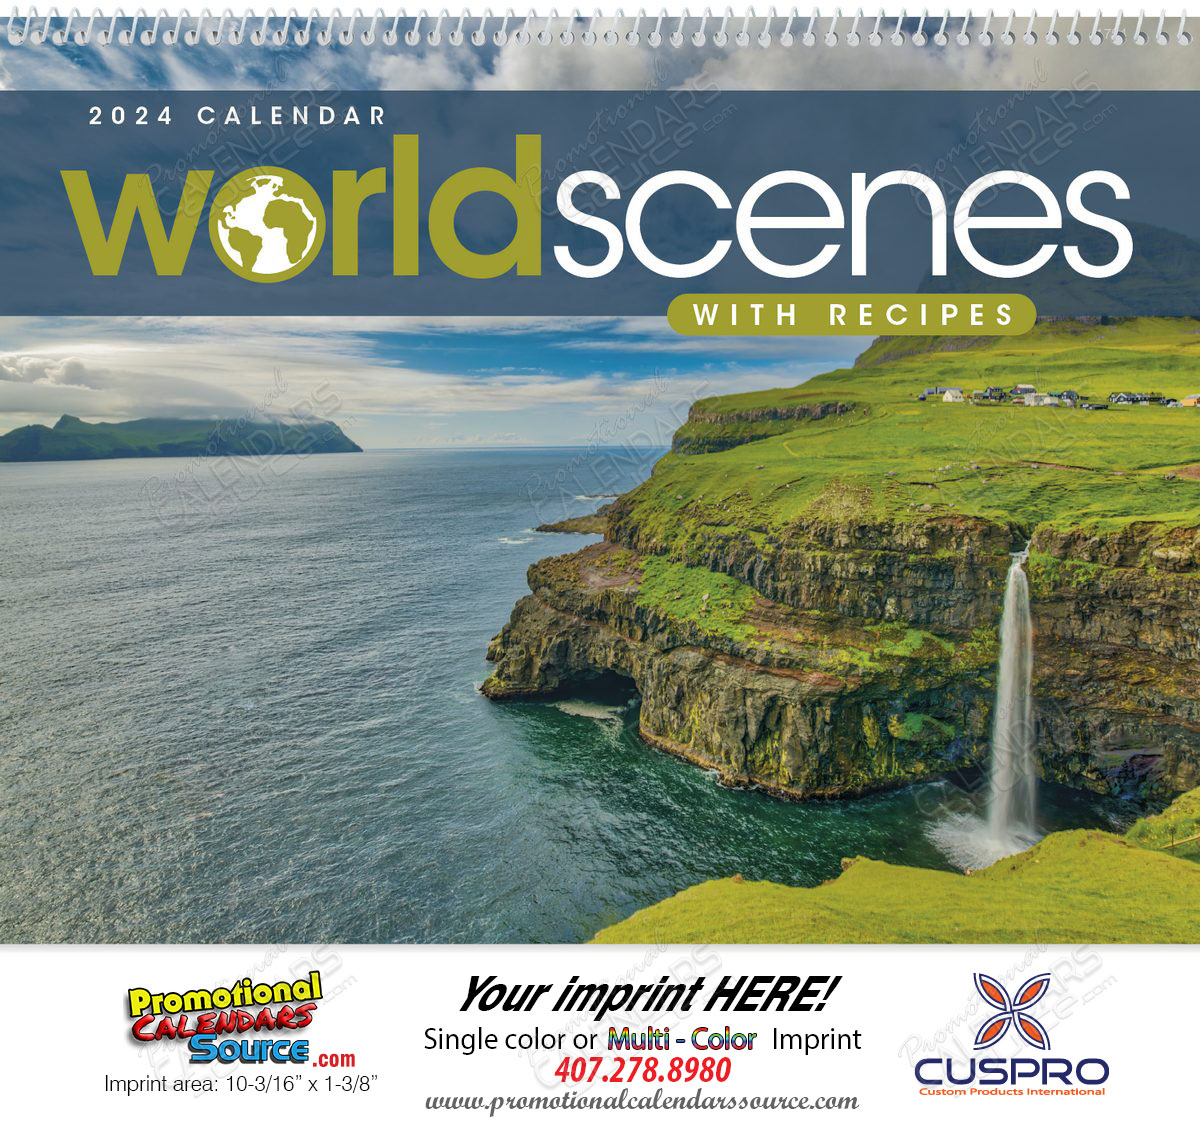 World Scenes with Recipe Promotional Calendar 